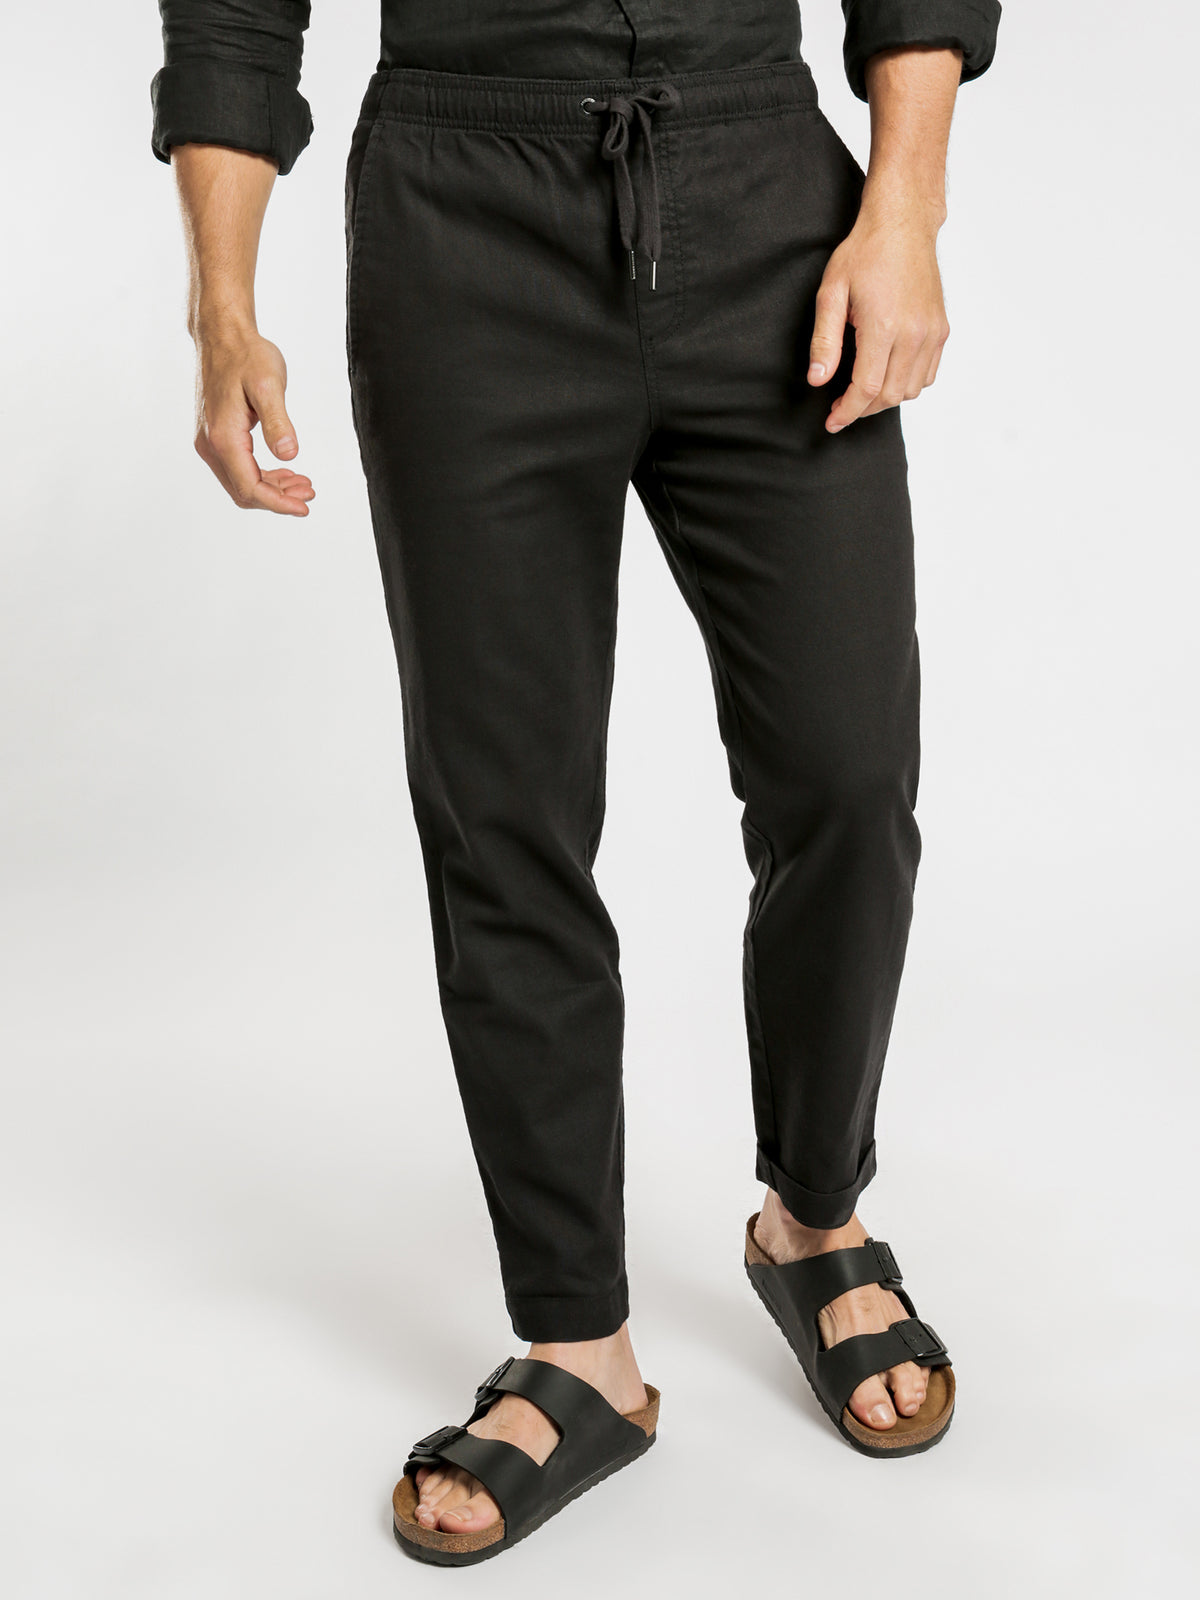 Nelson Linen Pants in Black